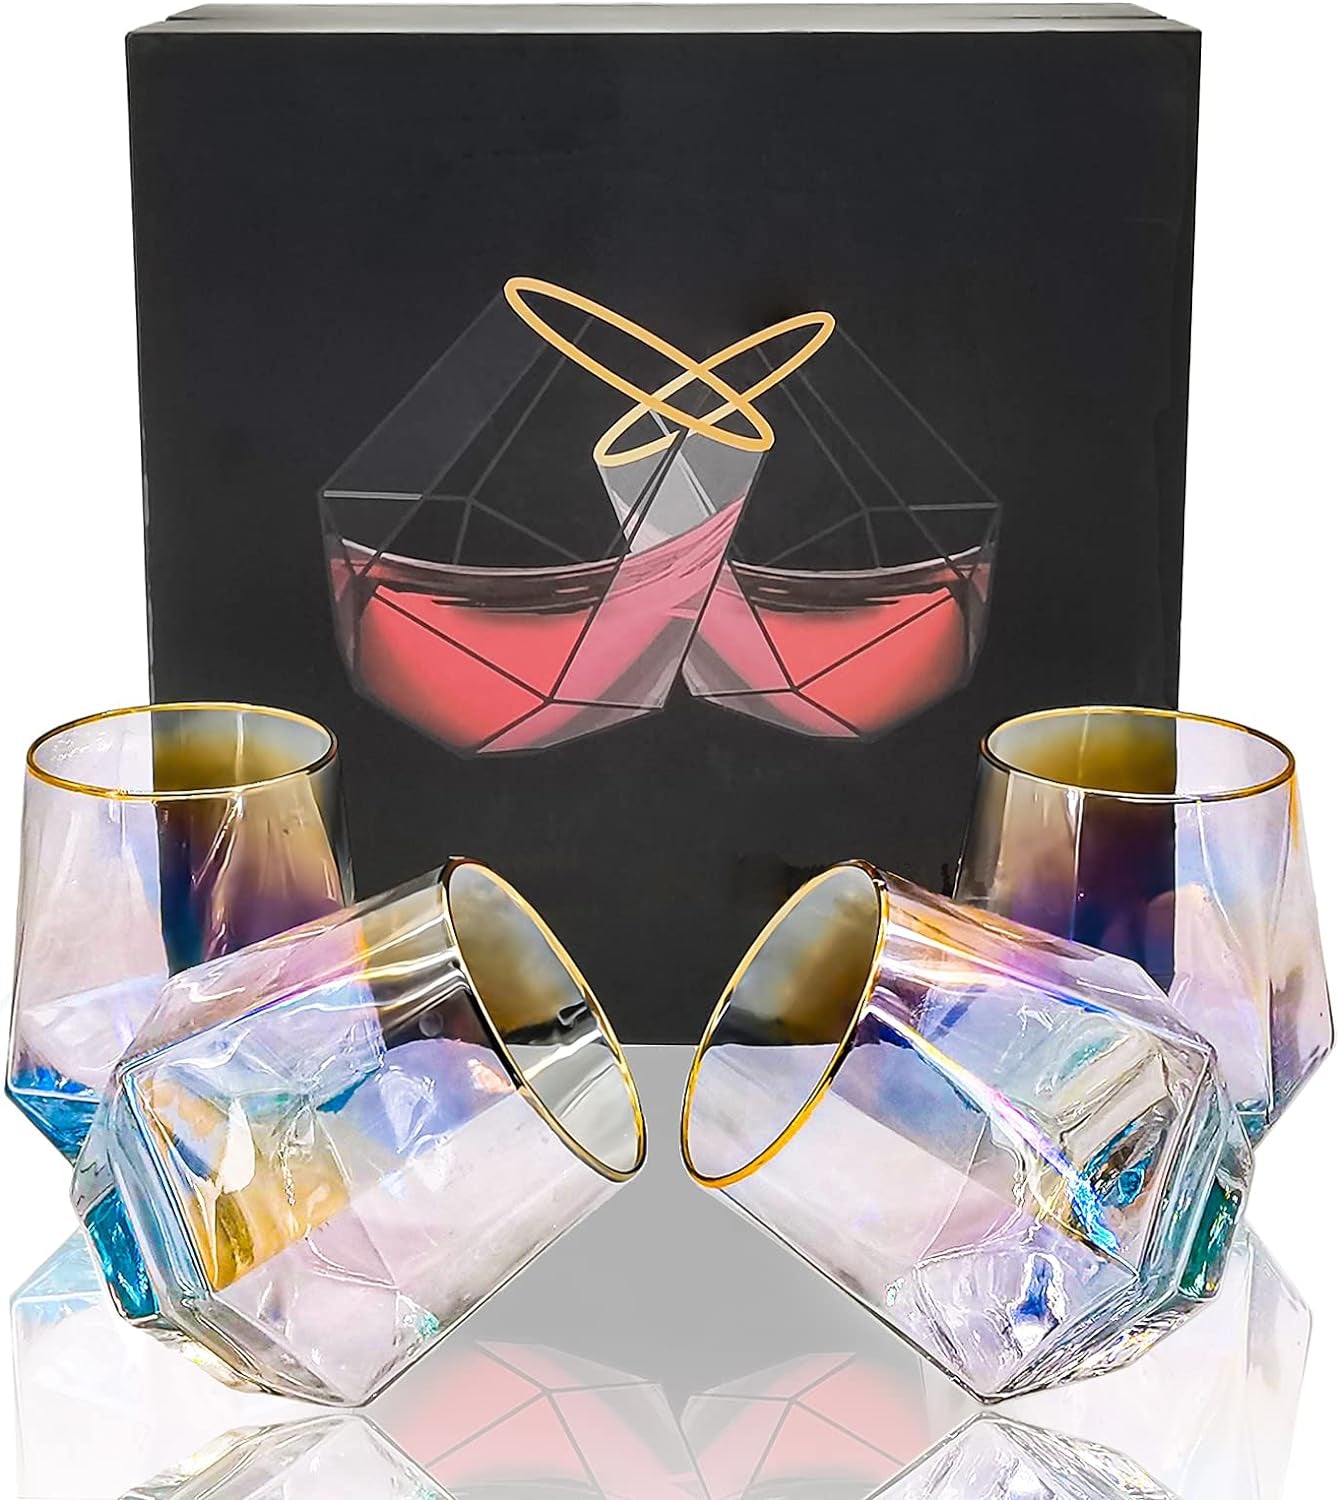 Diamond 4 PCS Whiskey Glasses